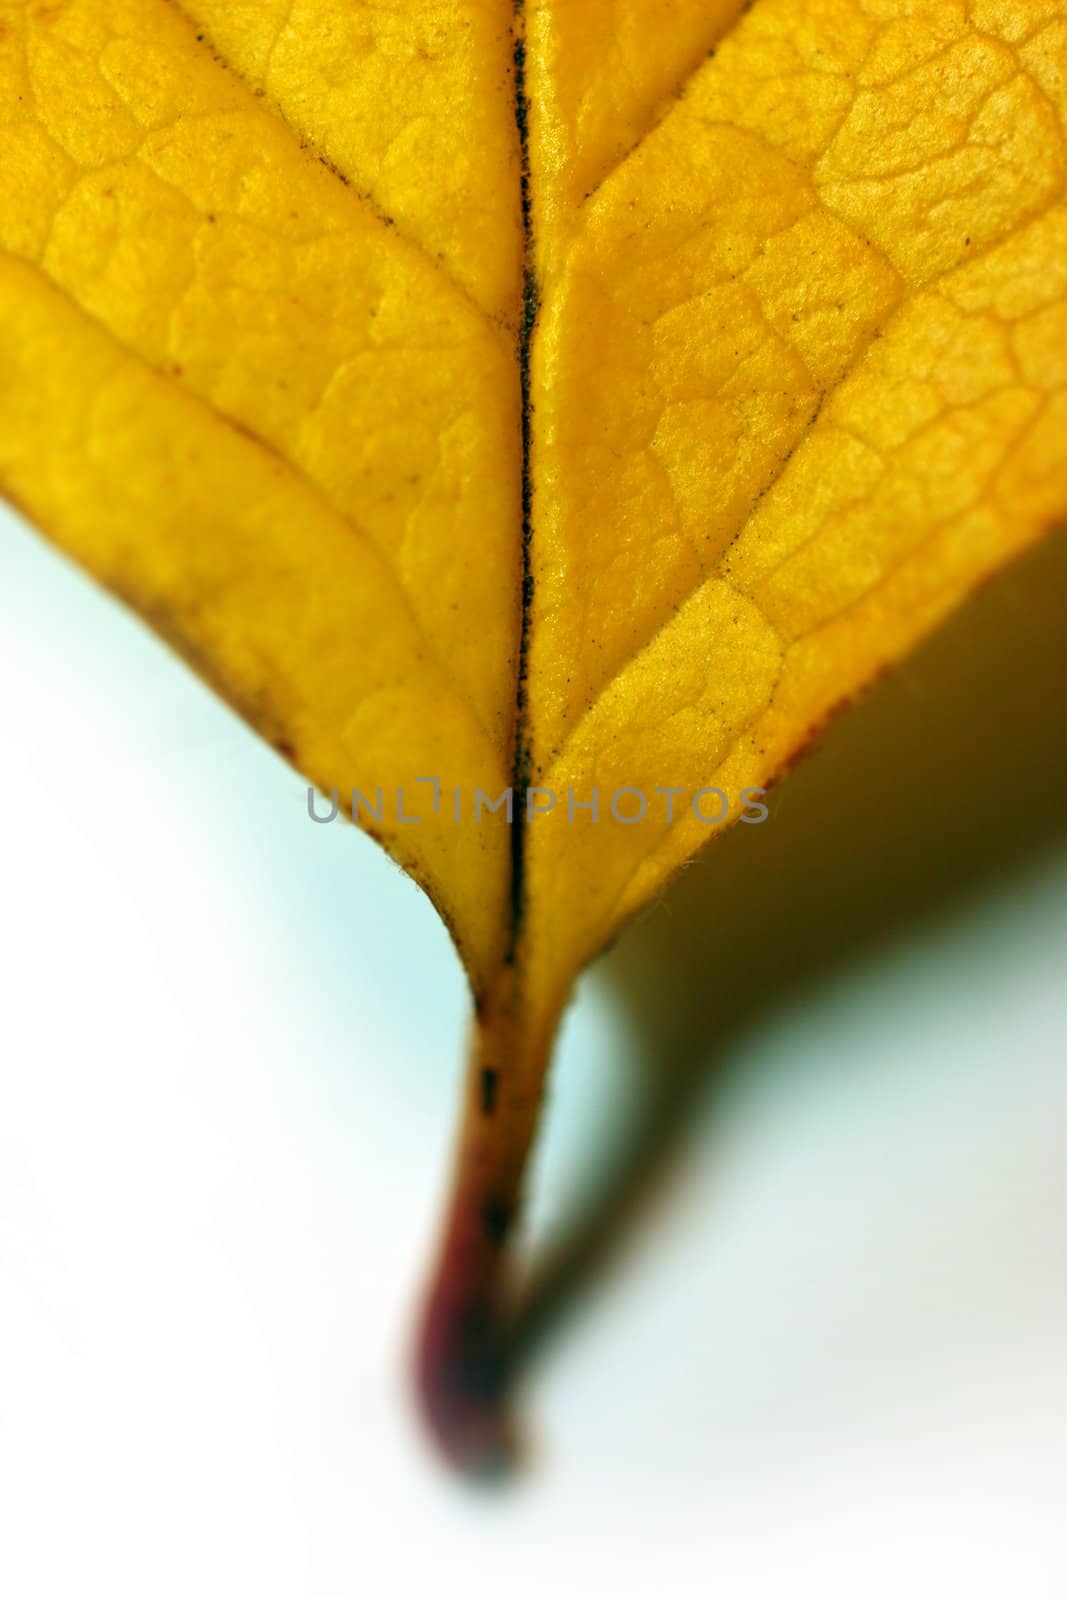 Detail of a fallen leaf